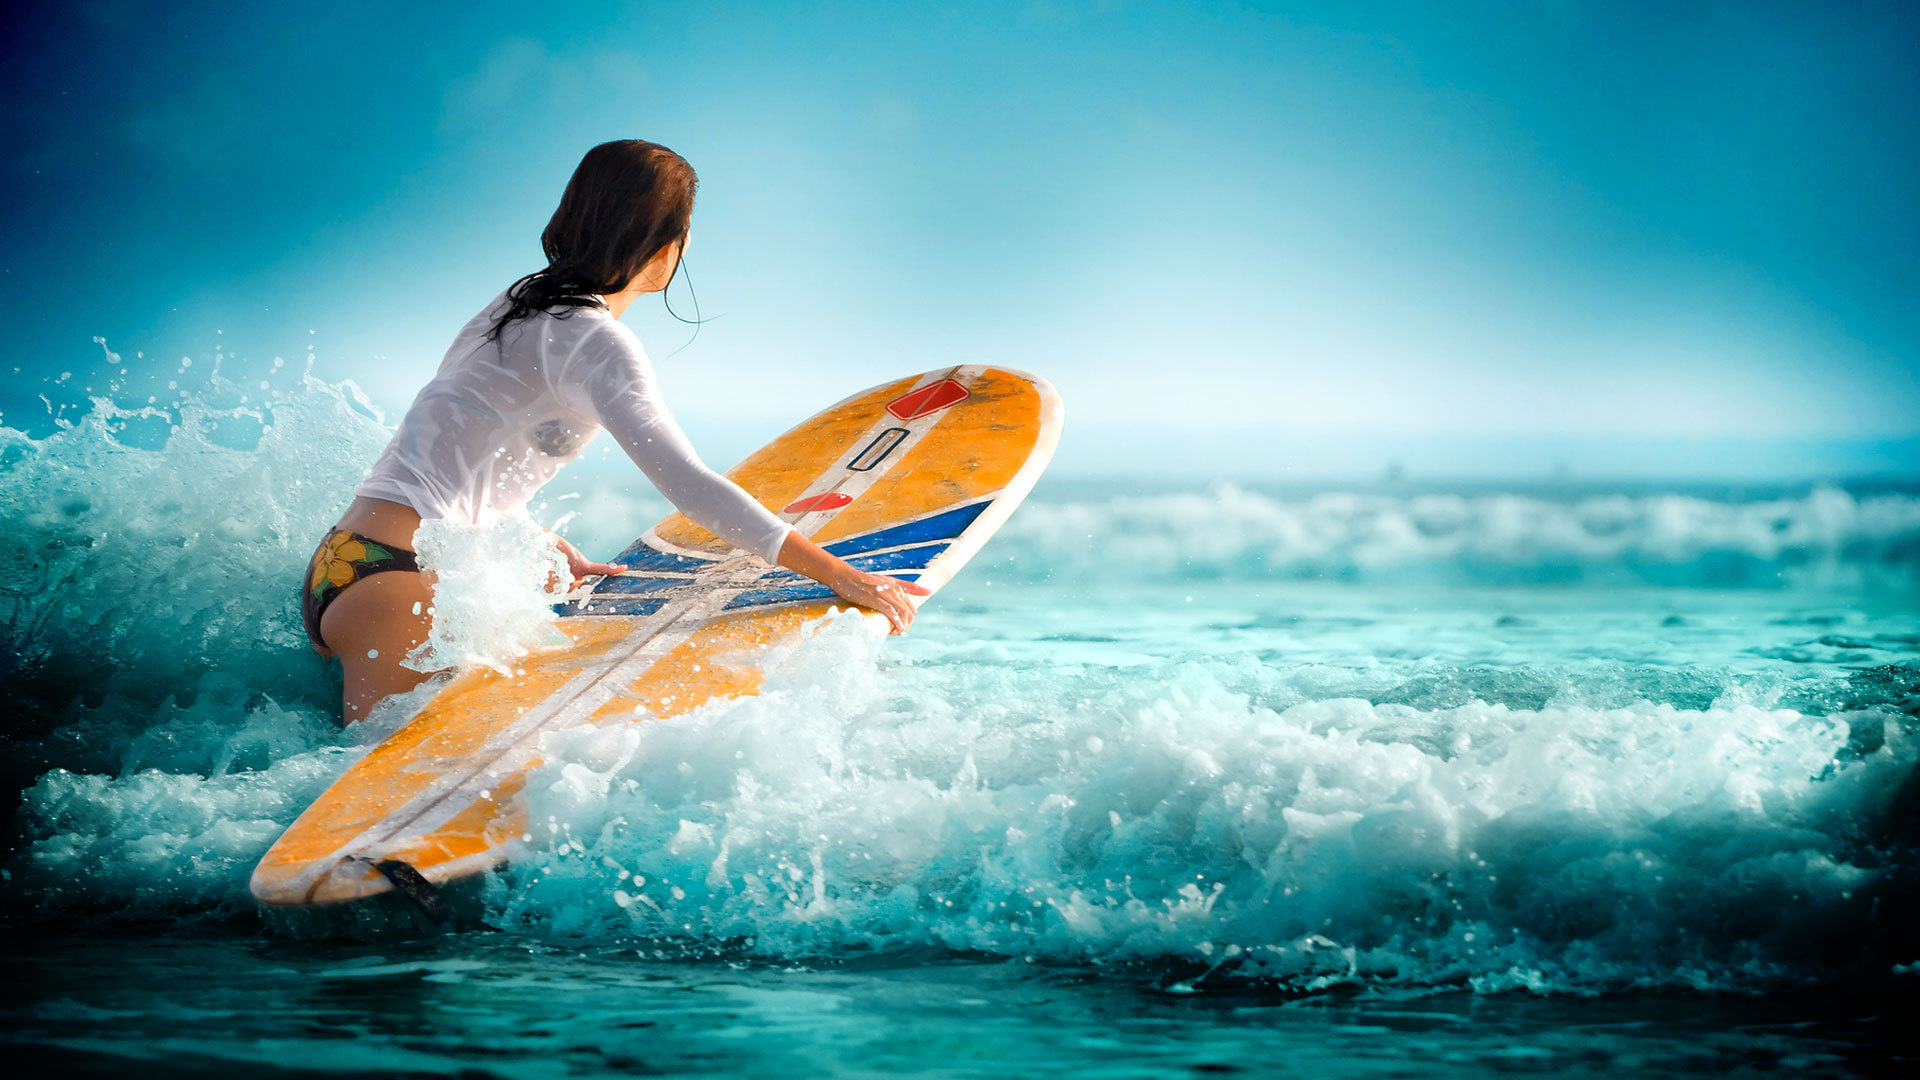 Surfing waves water sea girl wallpaper | 1920x1080 | 117562 ...